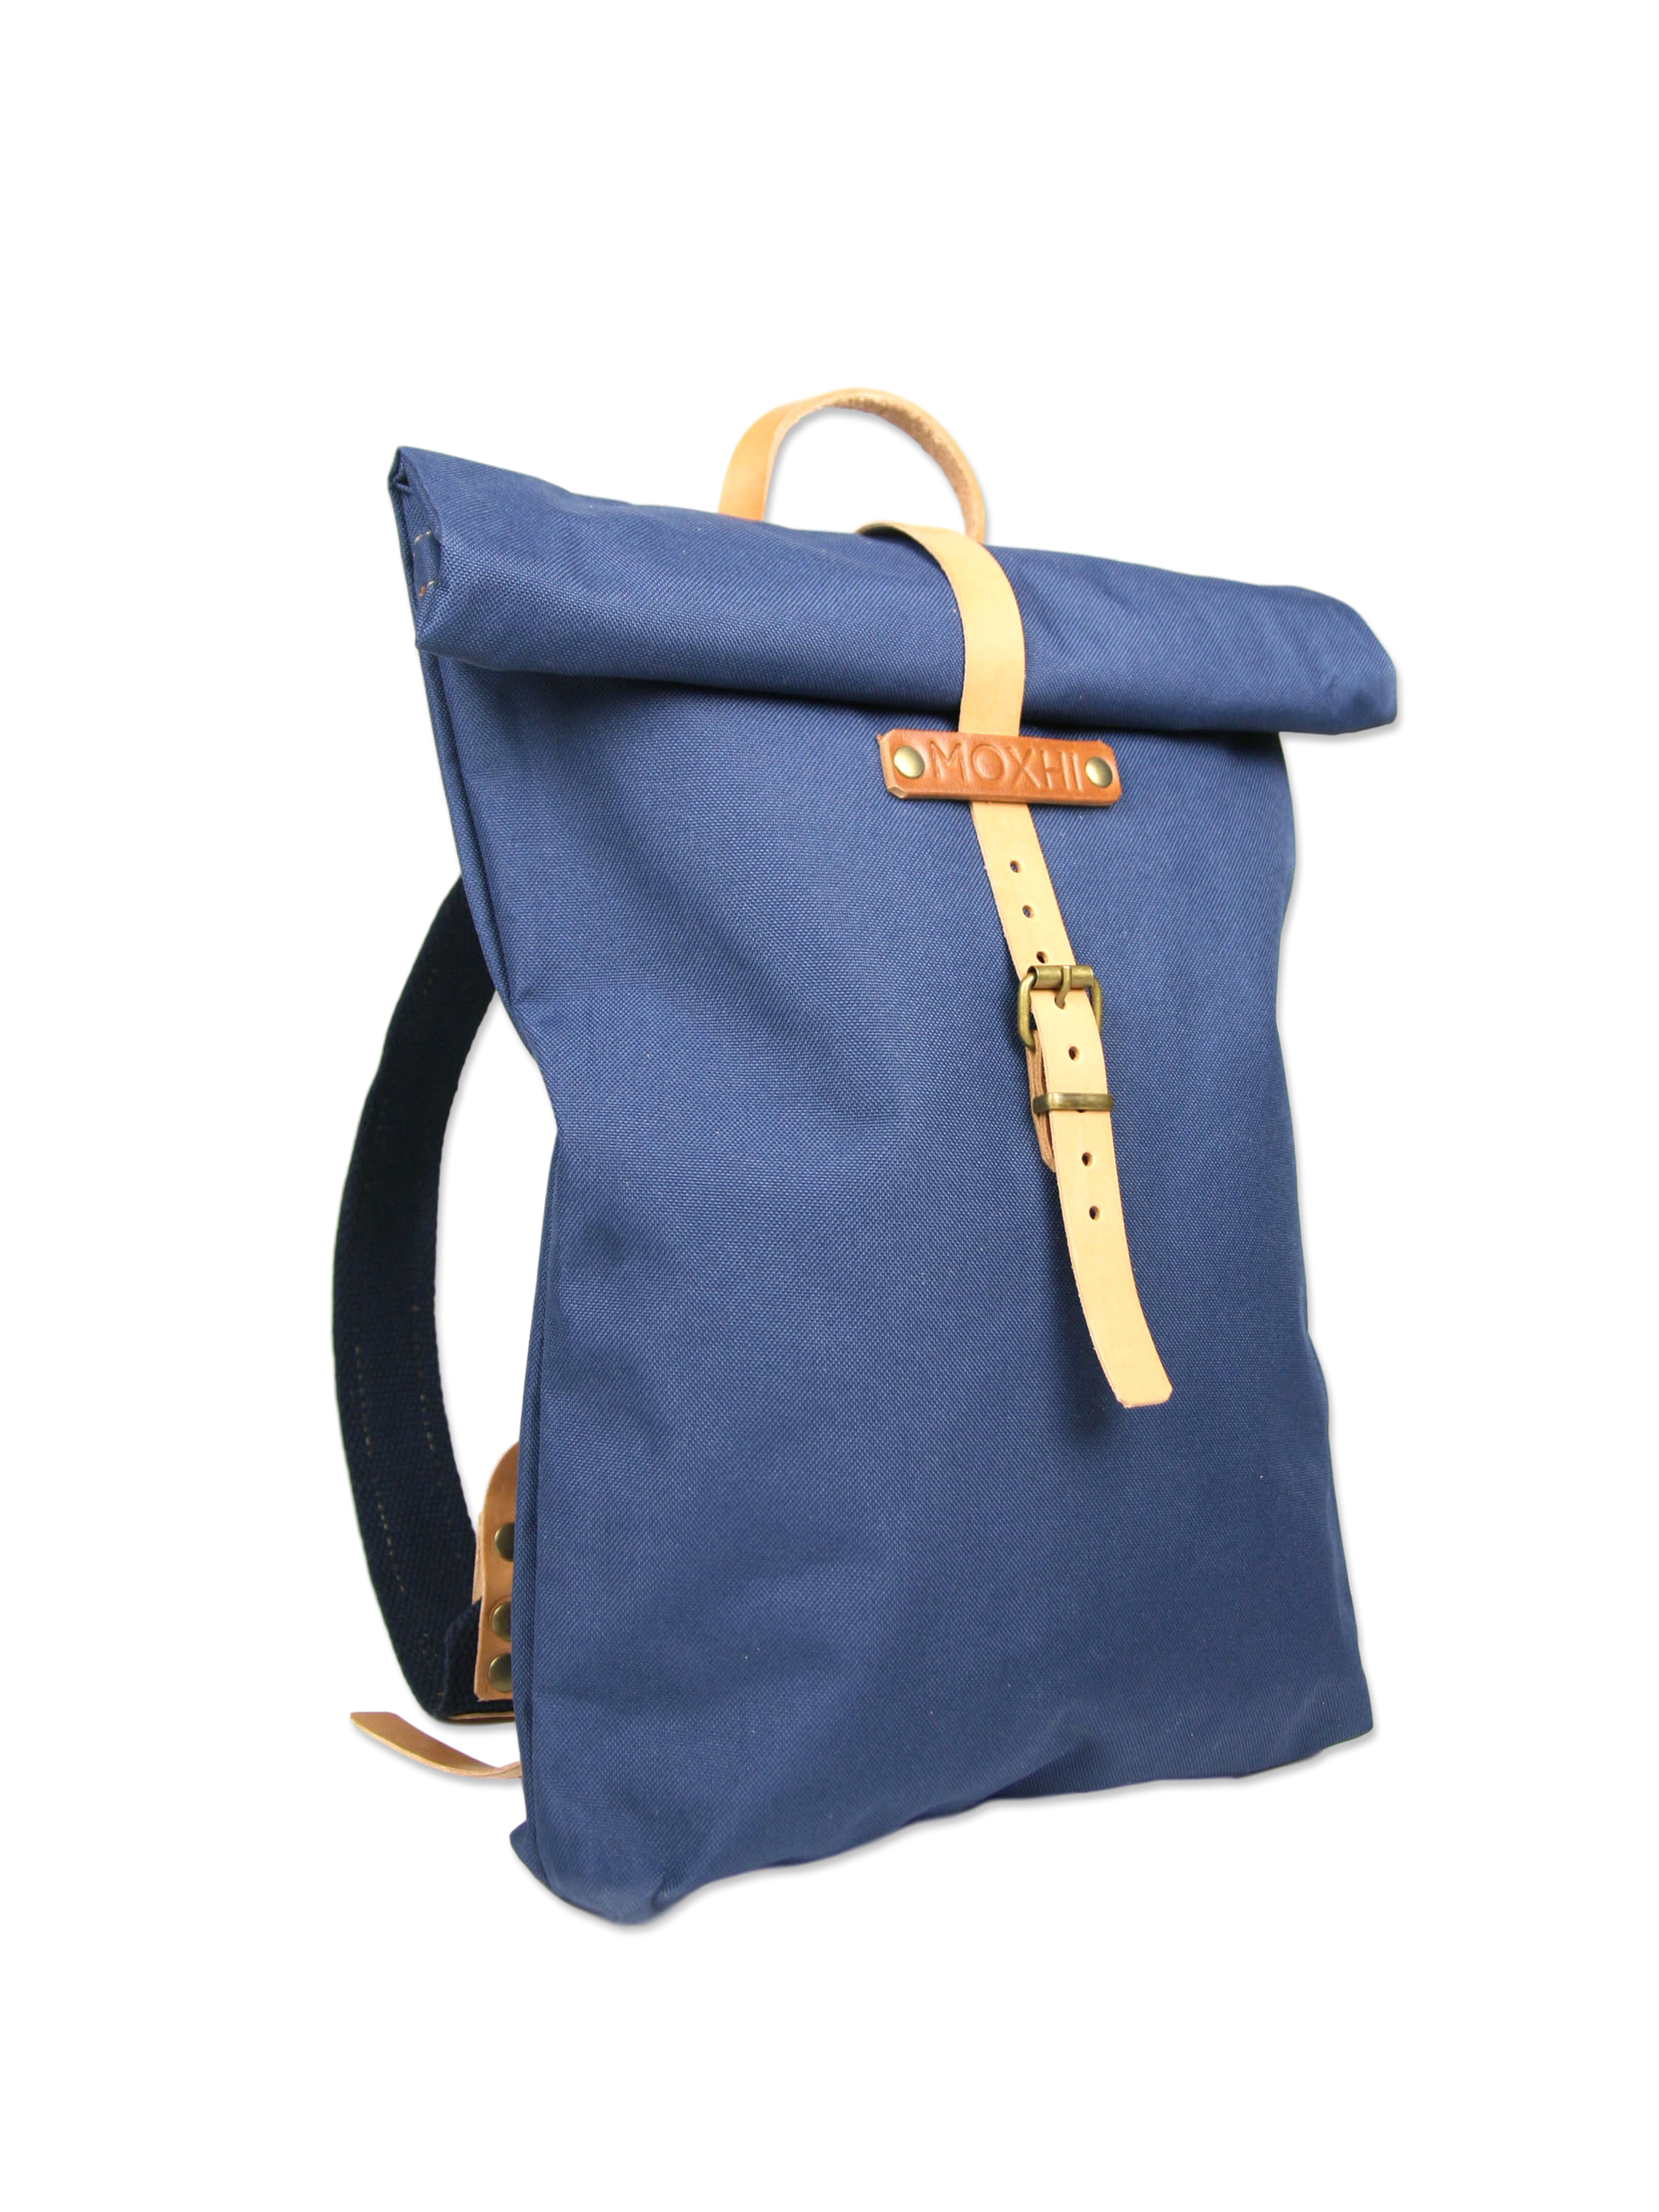 Blue rolltop backpack handmade